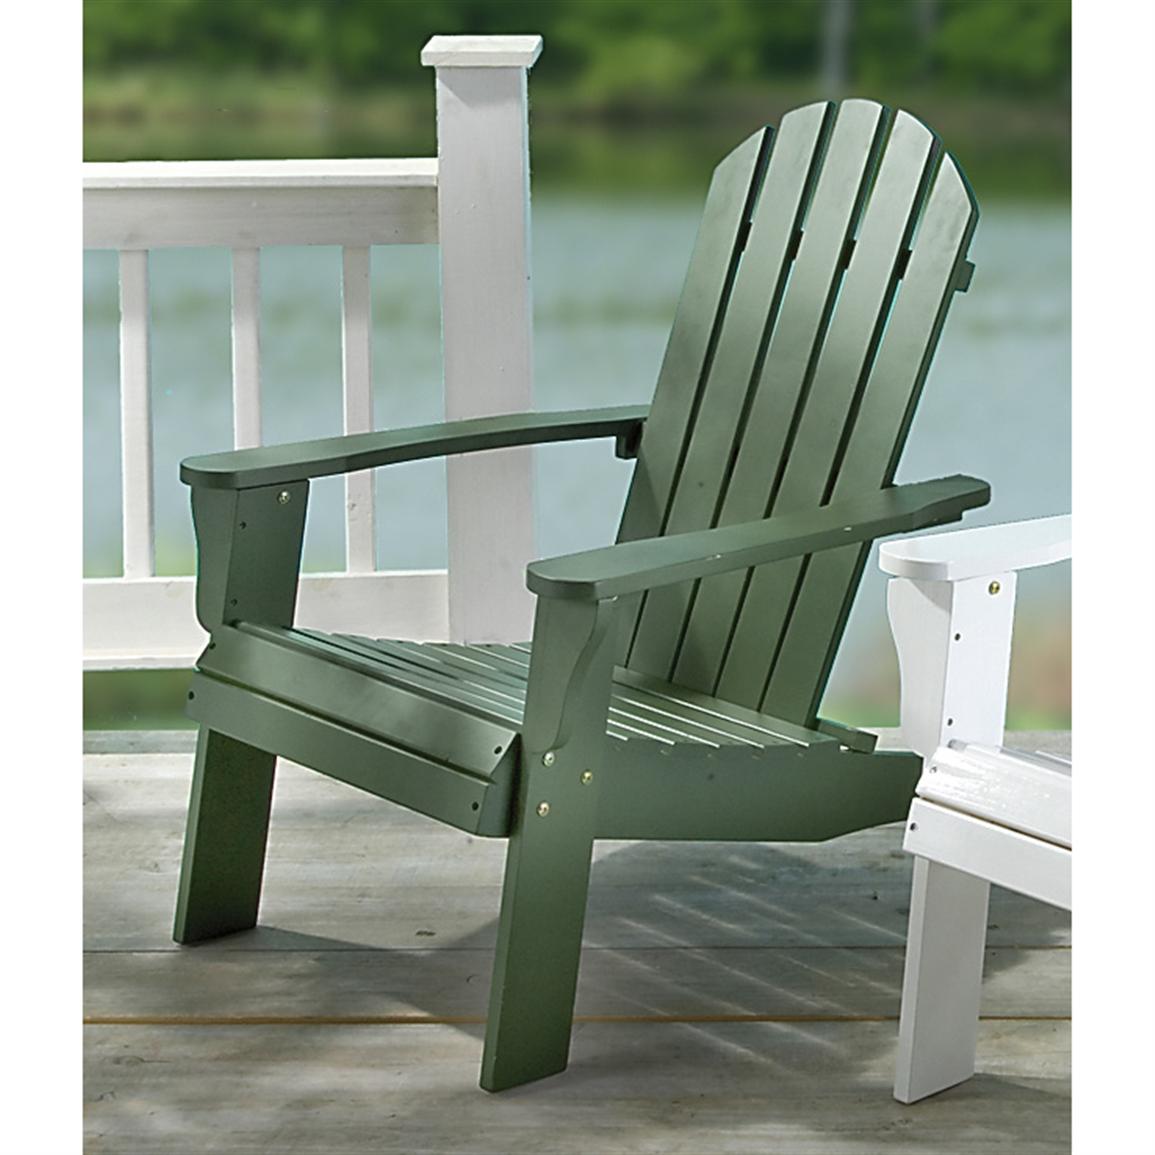 Painted Adirondack Chair - 131144, Patio Furniture at 